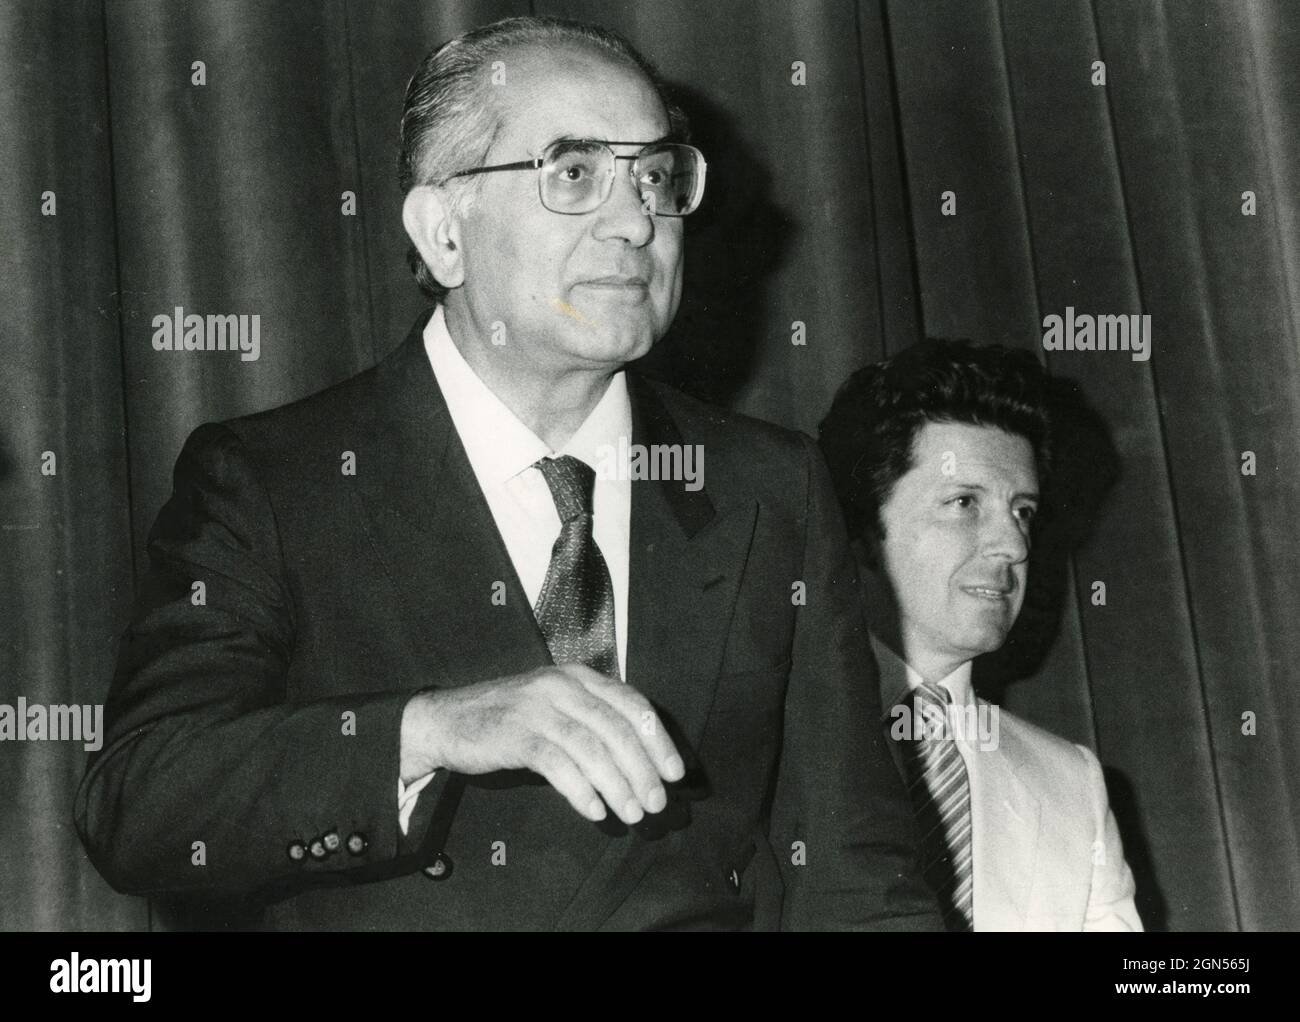 Ministro y político italiano Emilio Colombo, 1980s Foto de stock